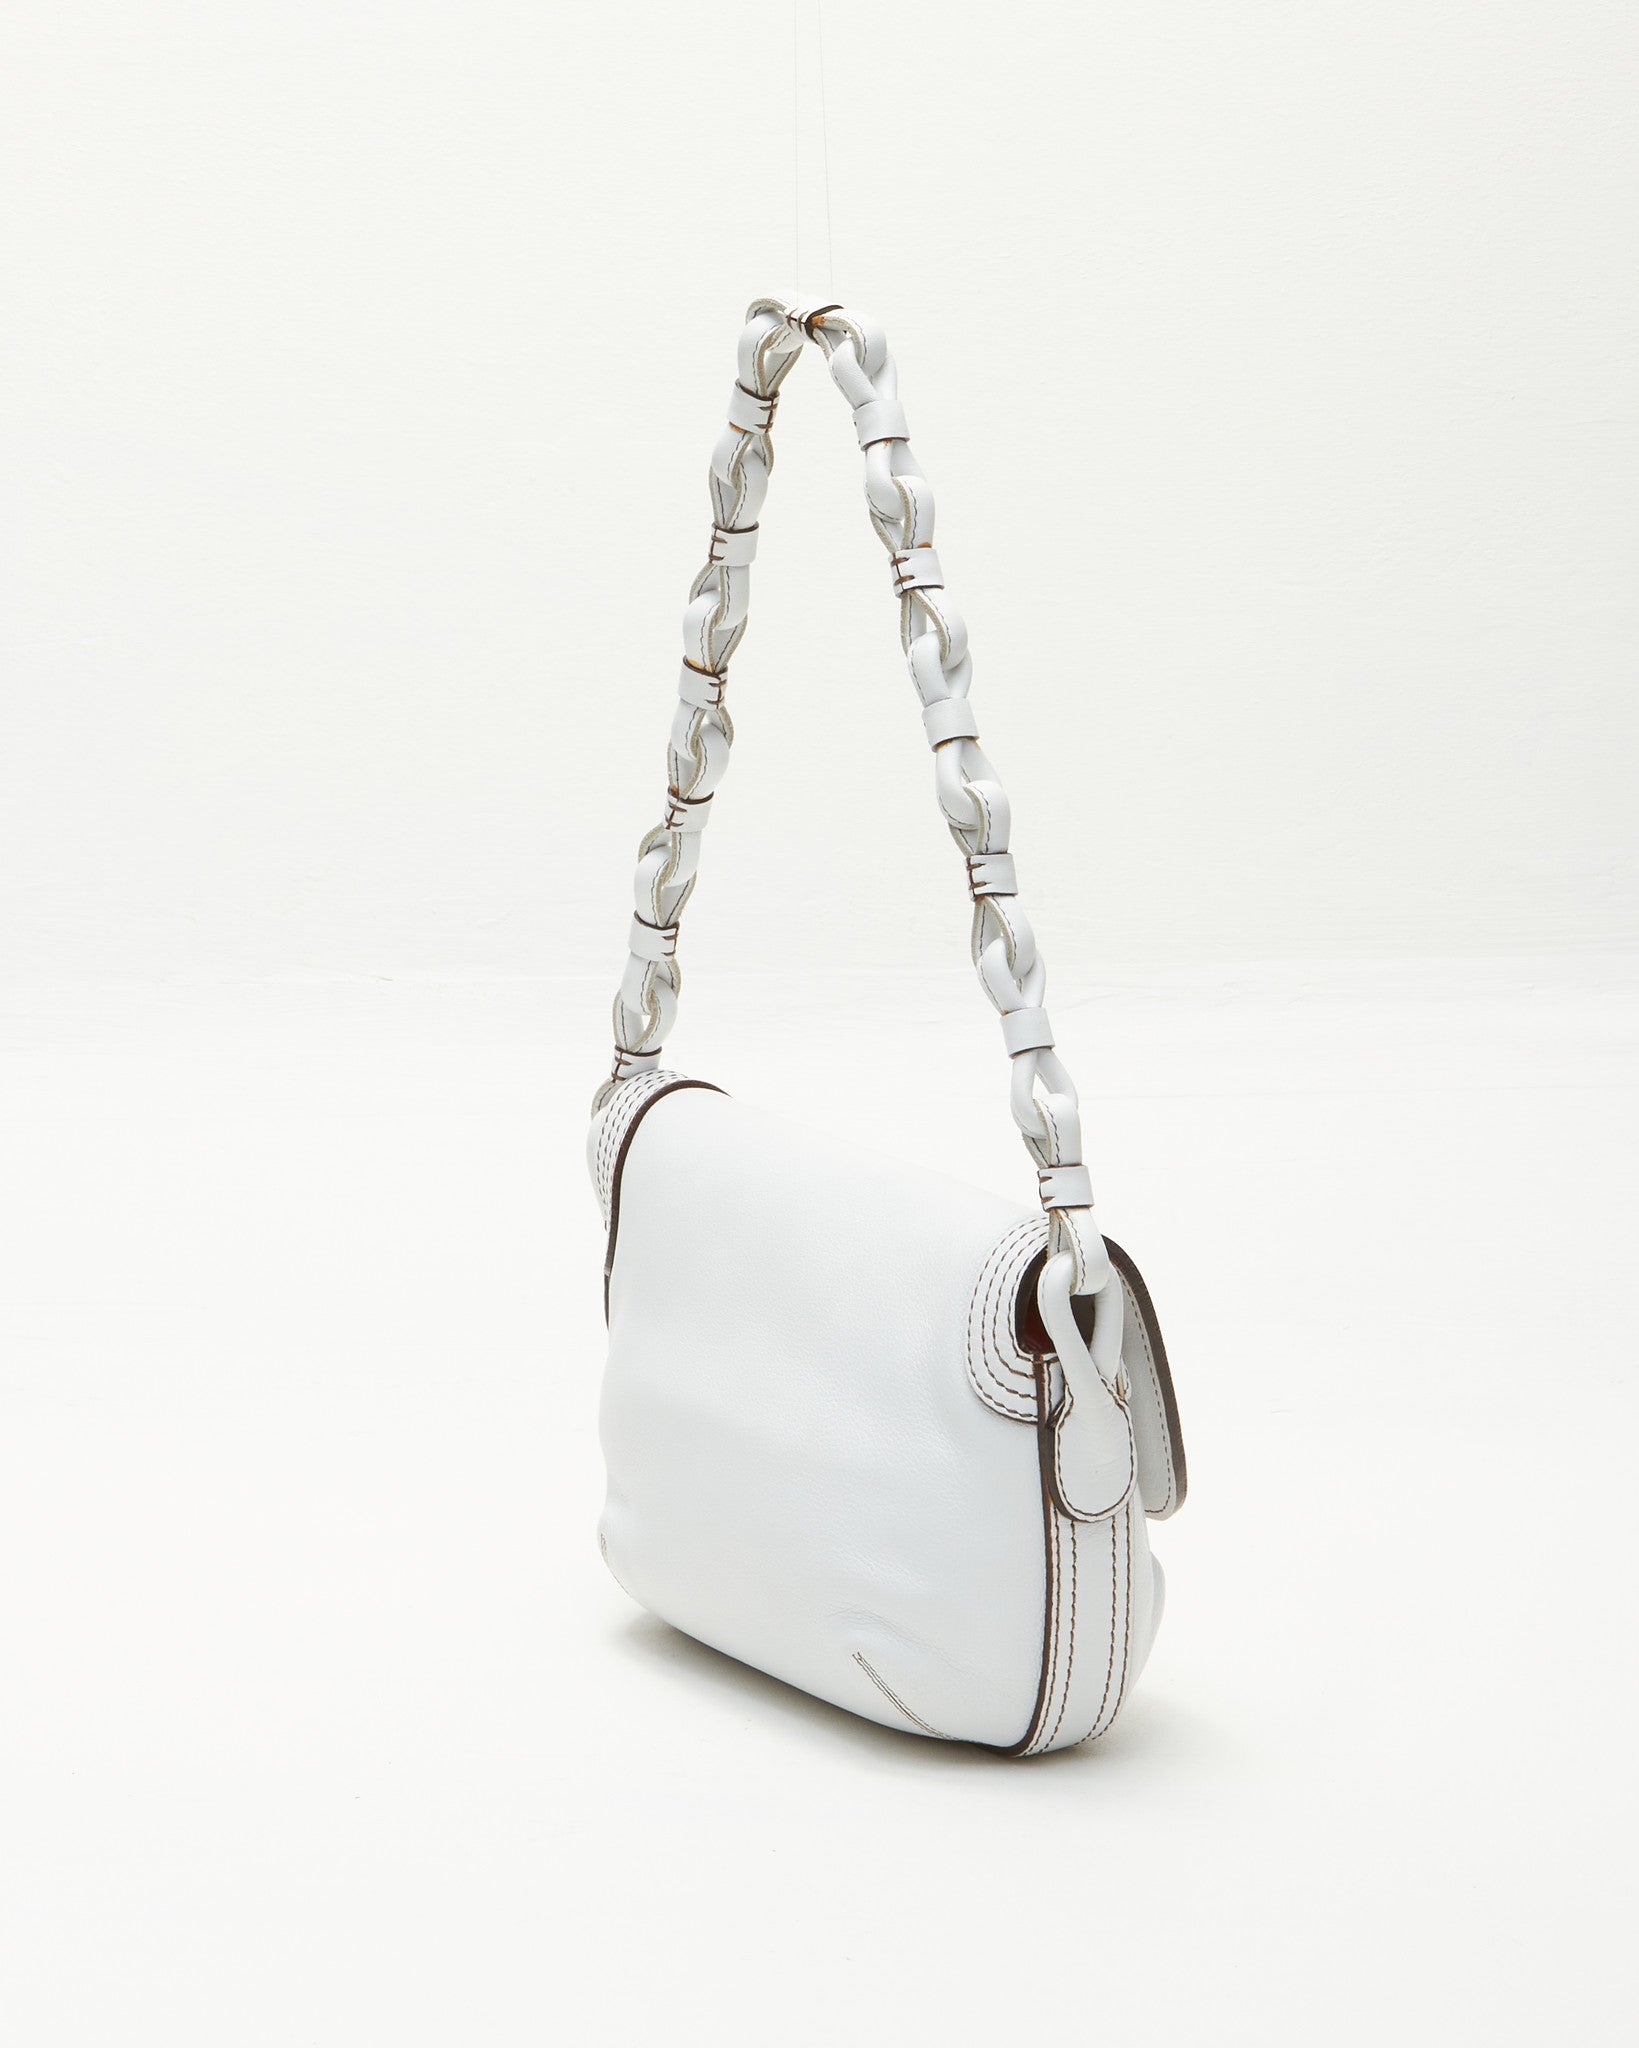 Loewe White Leather Woven Handle Shoulder Bag